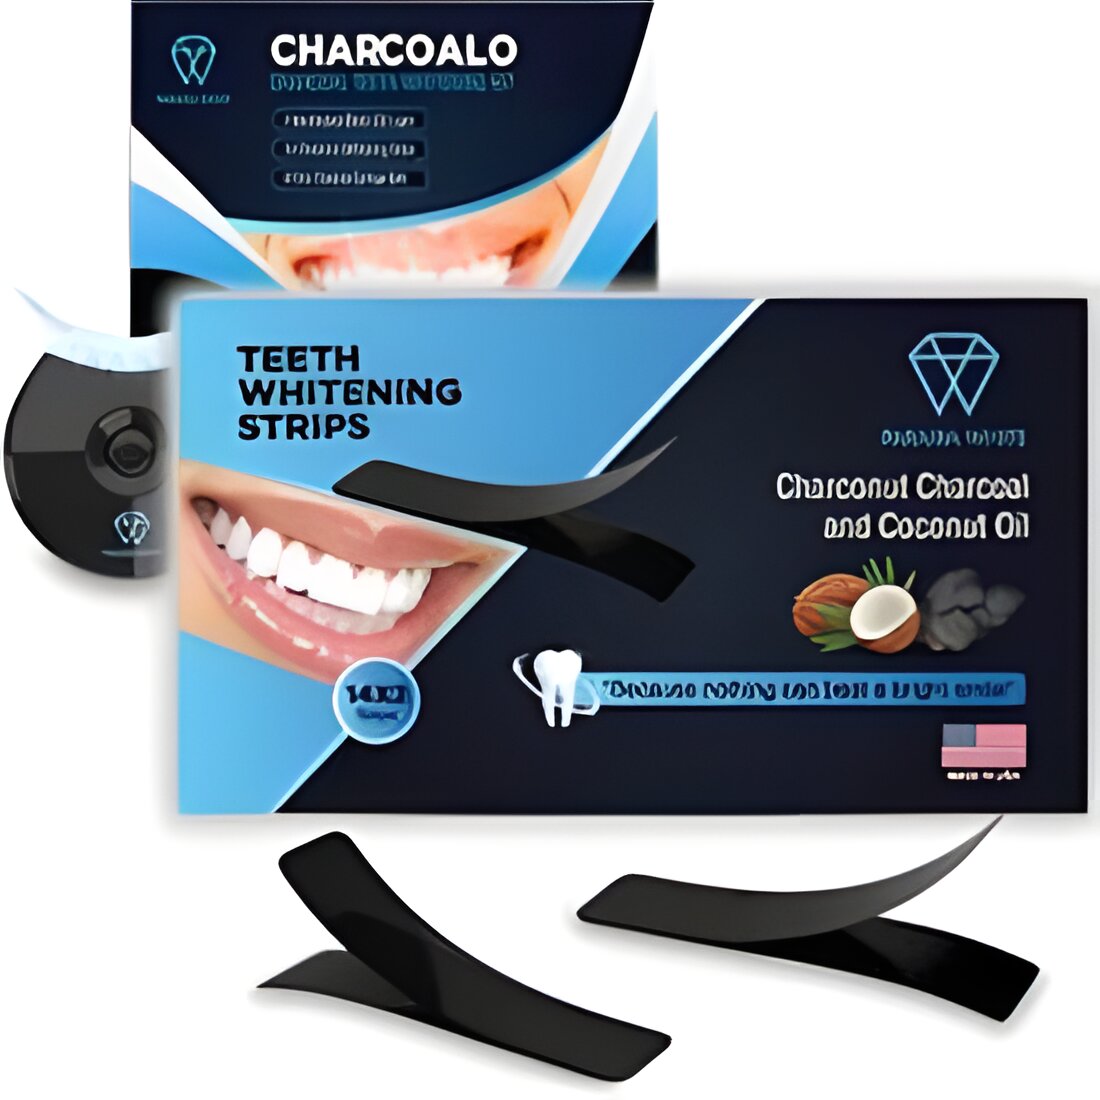 Free Paraiba White Dental Product Samples